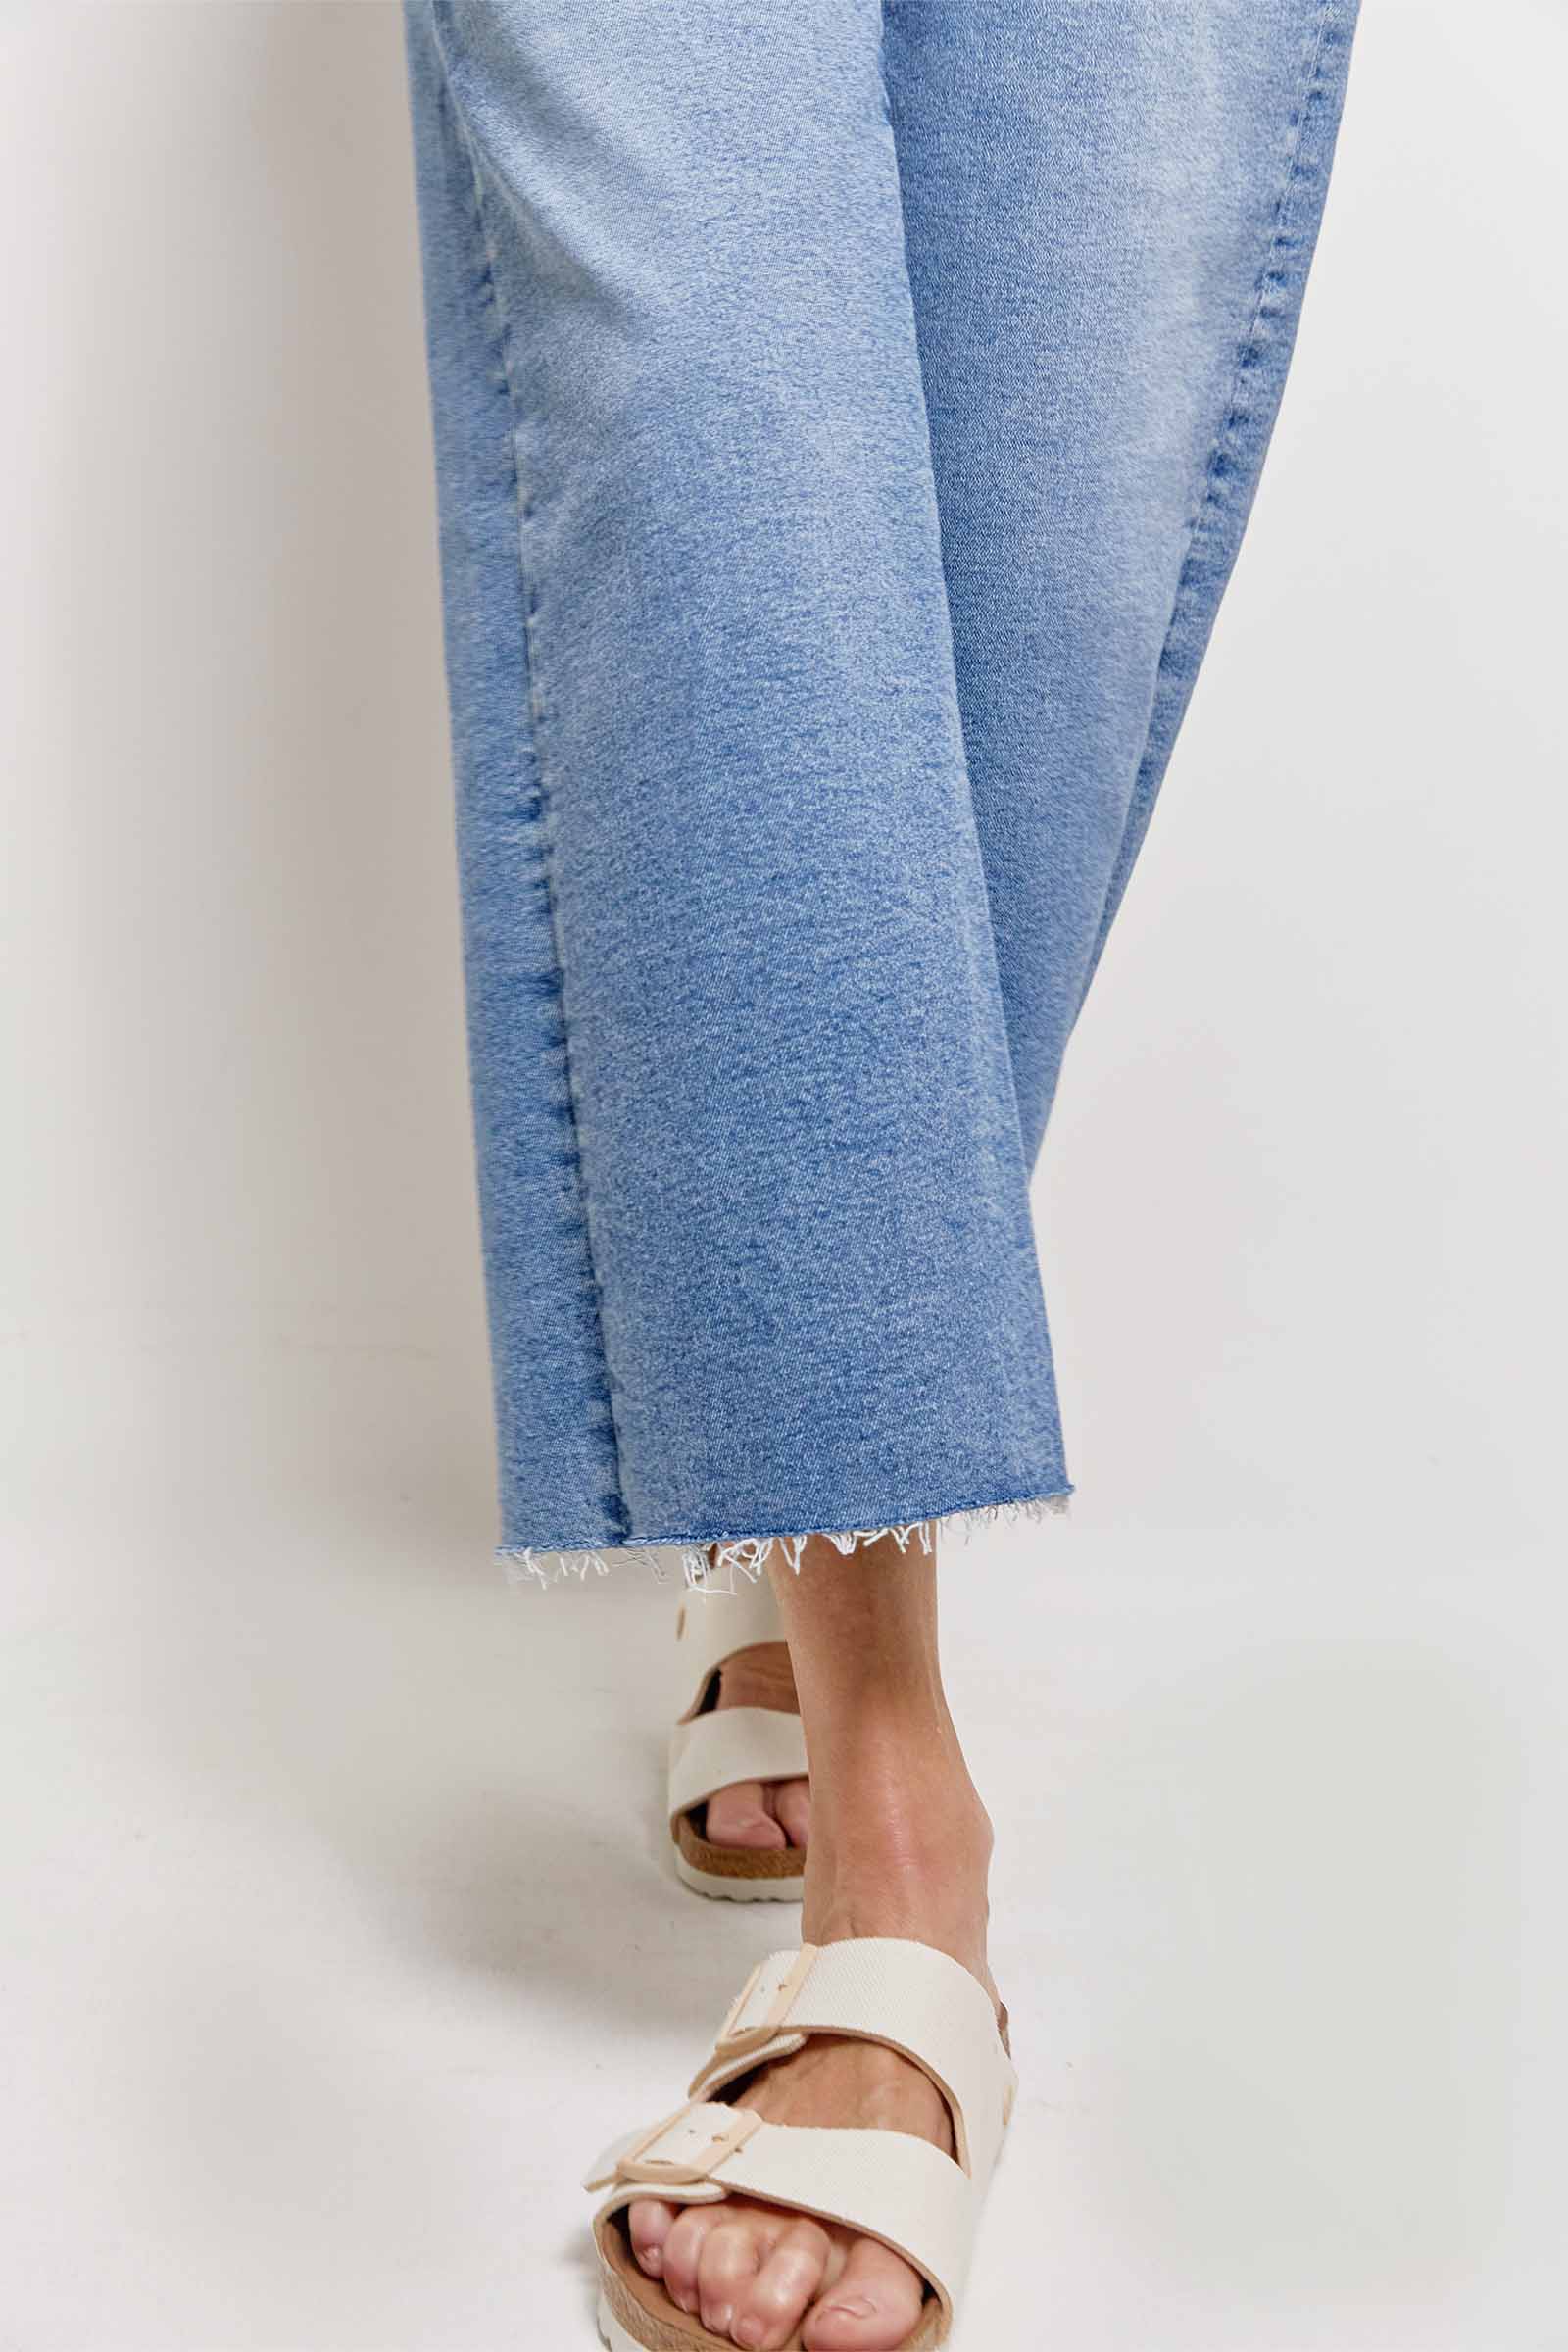 ag saige wide leg crop fray jeans.